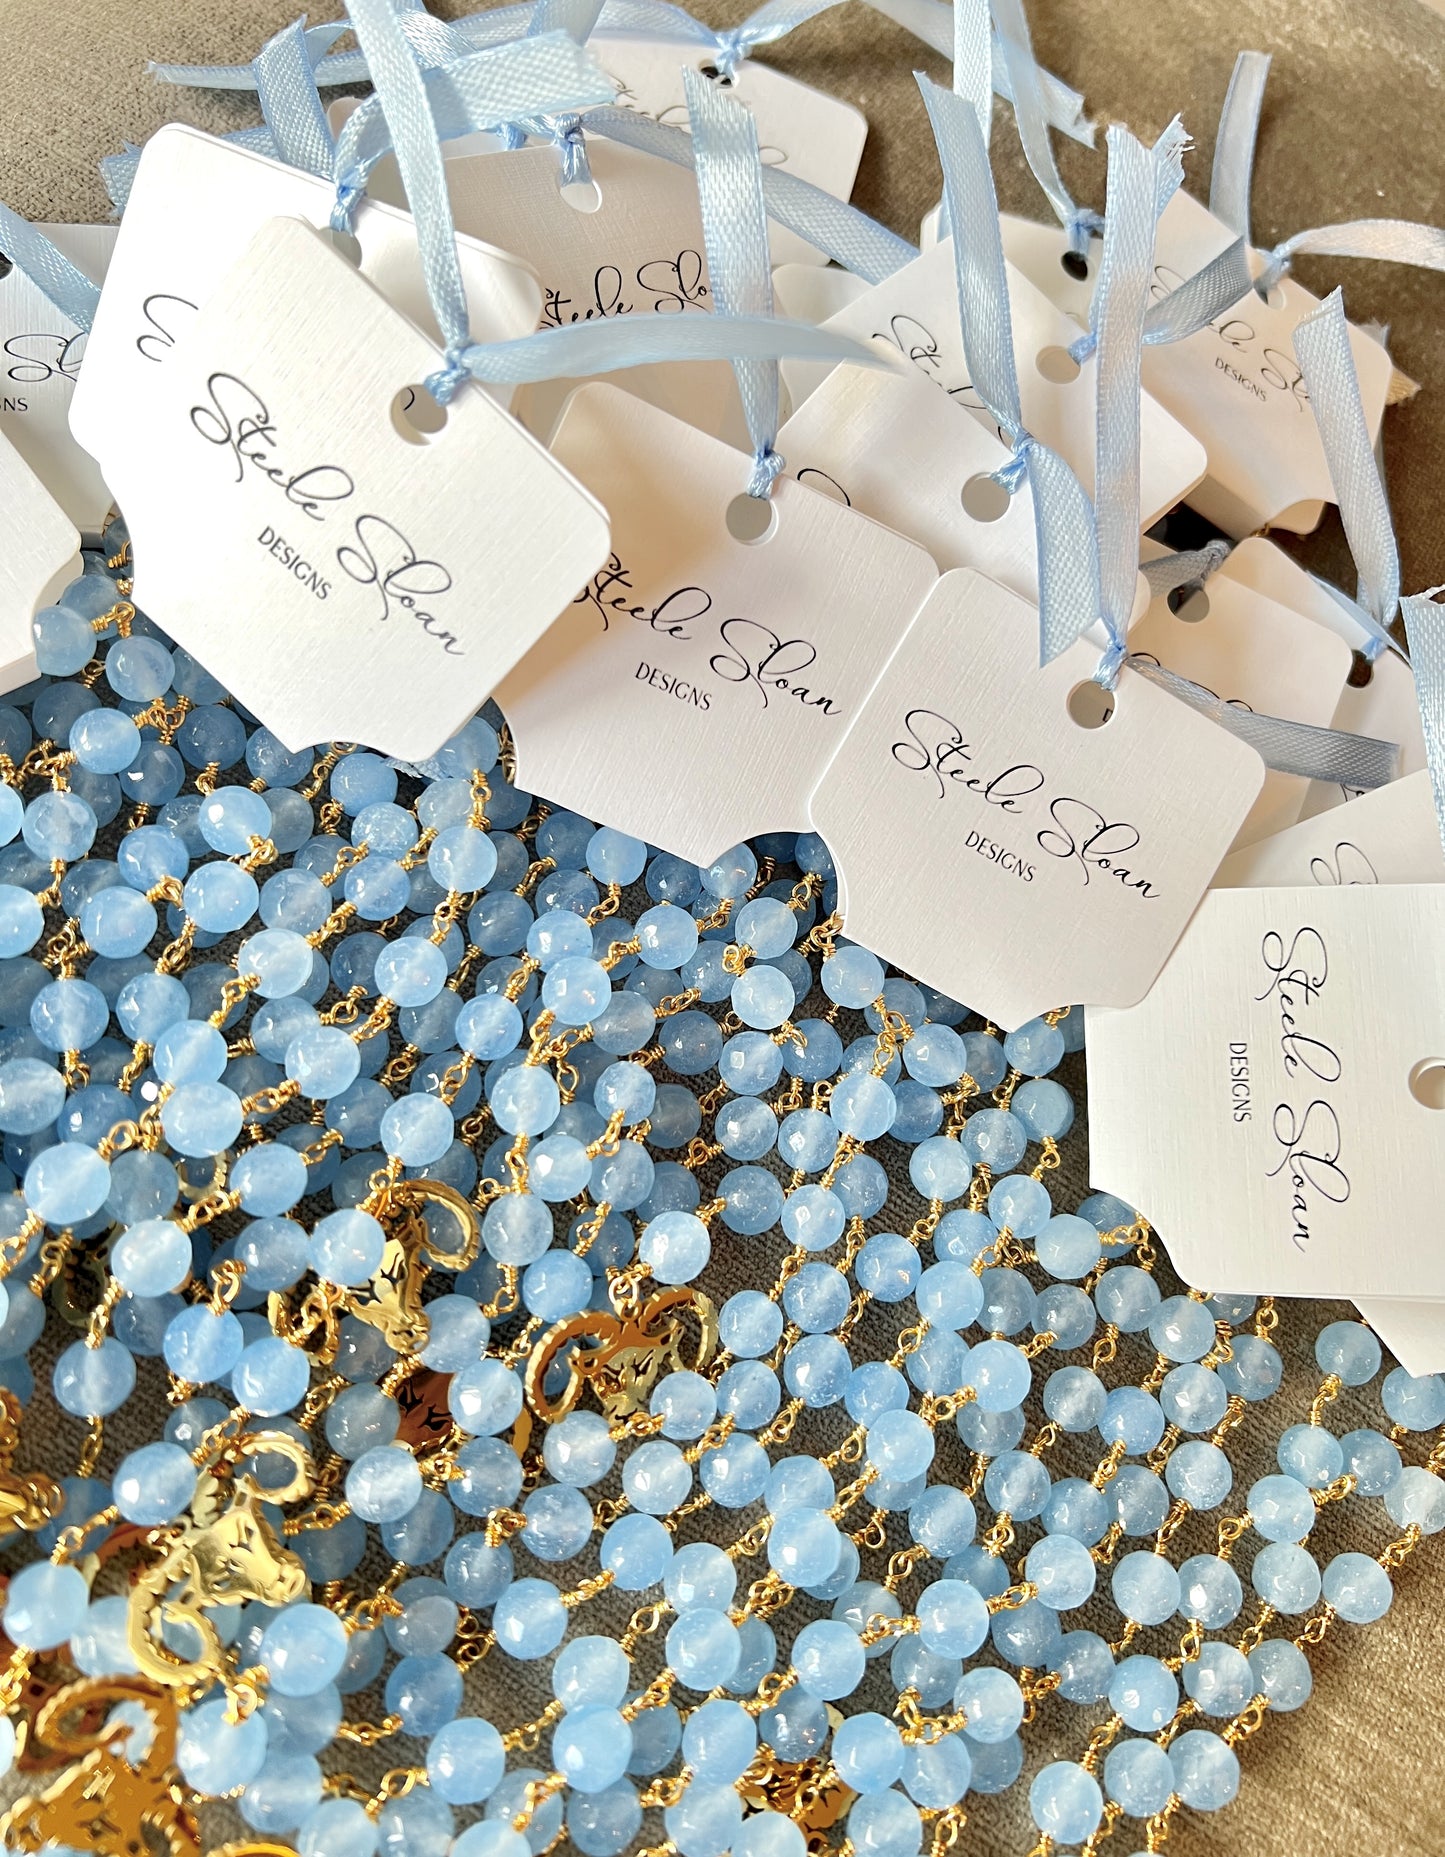 North Carolina Tar Heels Gold Rameses Necklace with Blue Beads